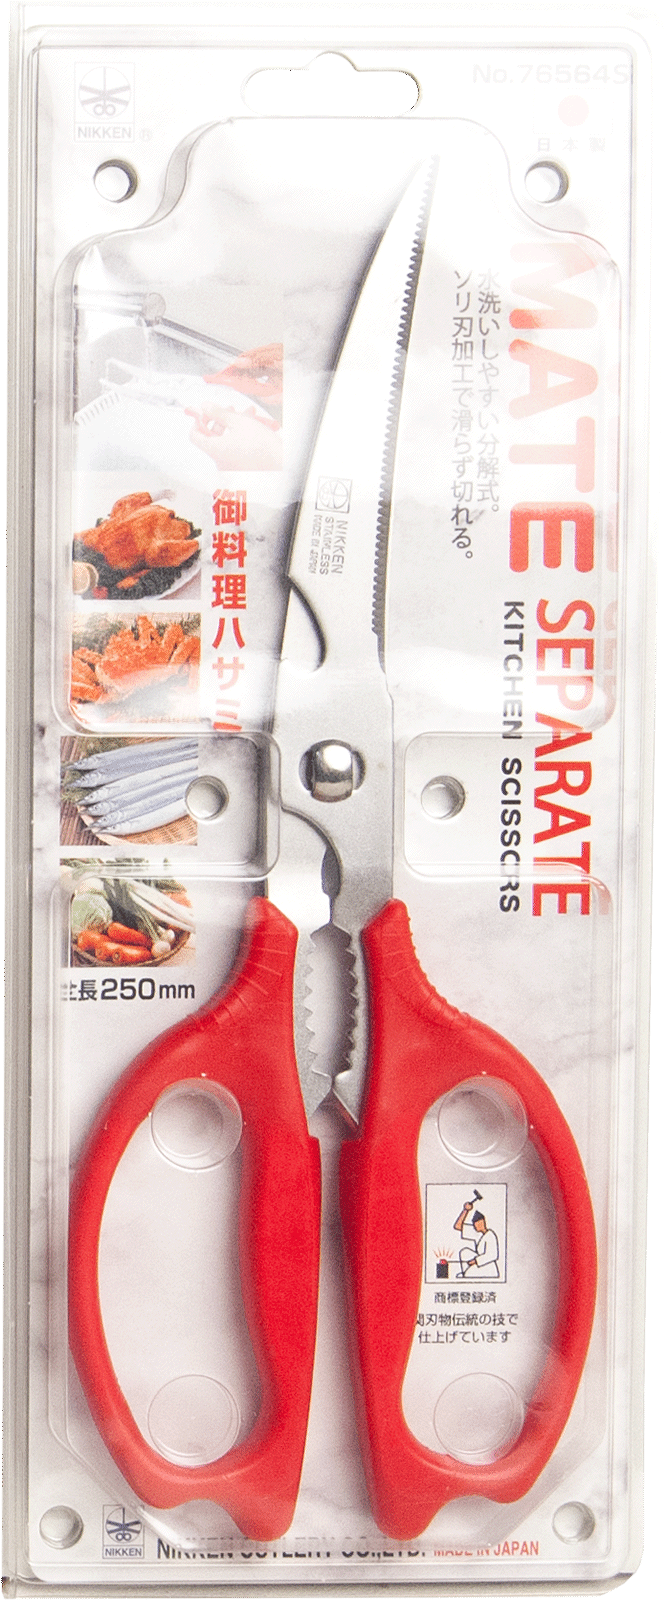 Japanese scissors Curved blade flourine coated, detachable 1